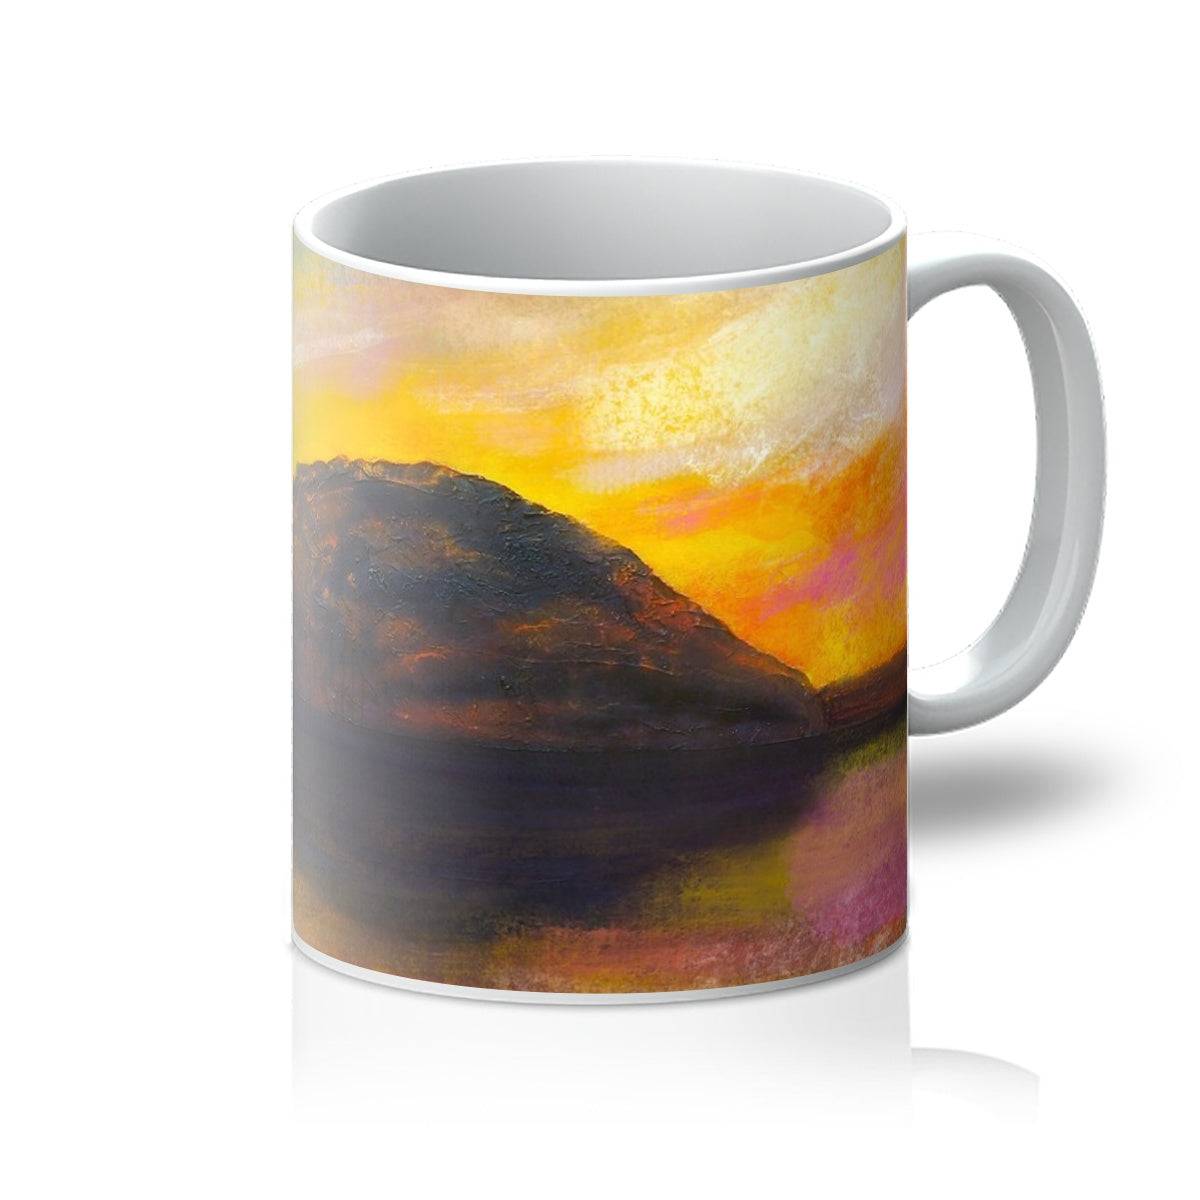 Ailsa Craig Dusk Arran Art Gifts Mug-Mugs-Arran Art Gallery-11oz-White-Paintings, Prints, Homeware, Art Gifts From Scotland By Scottish Artist Kevin Hunter